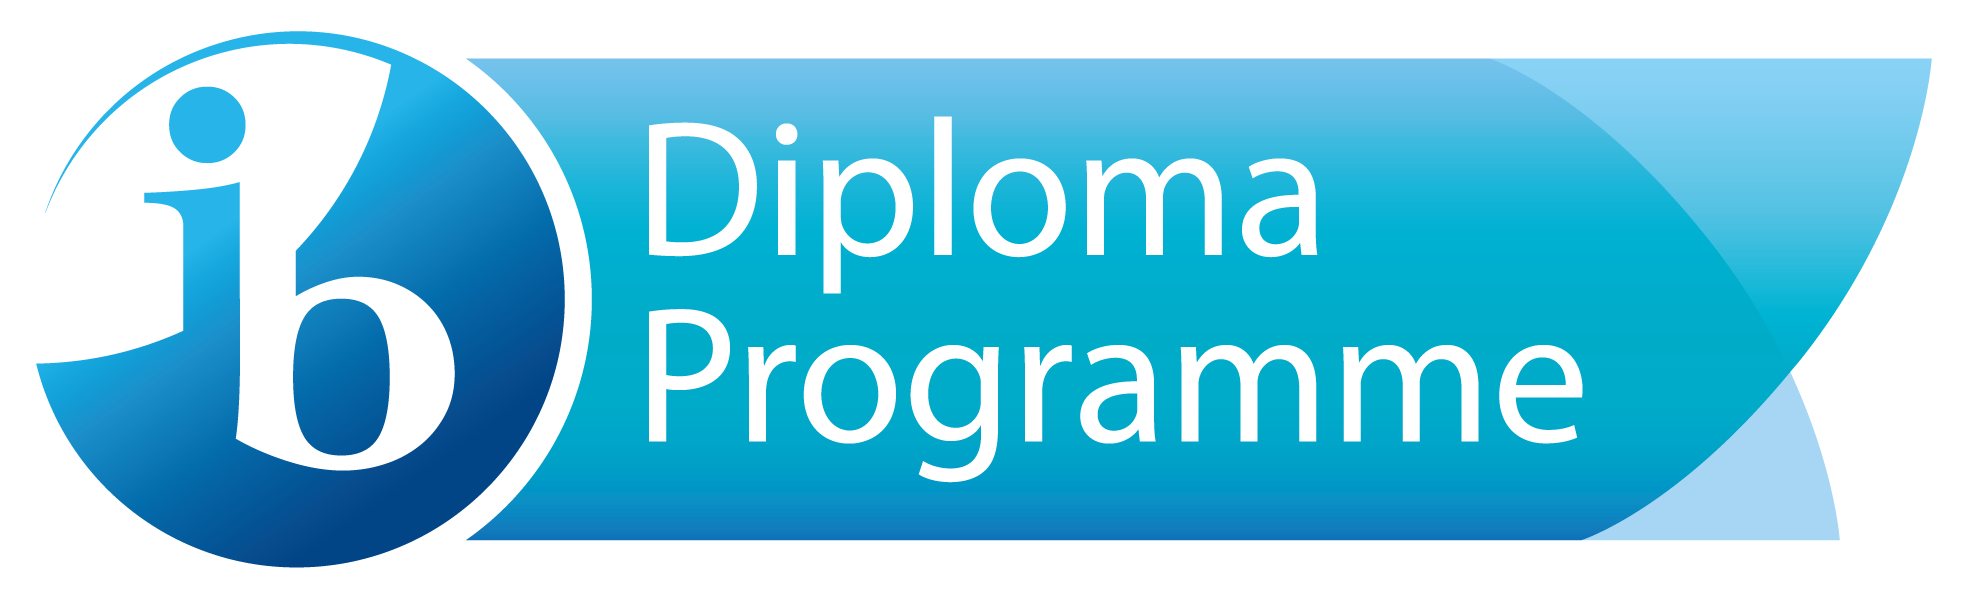 IB Programme Logo